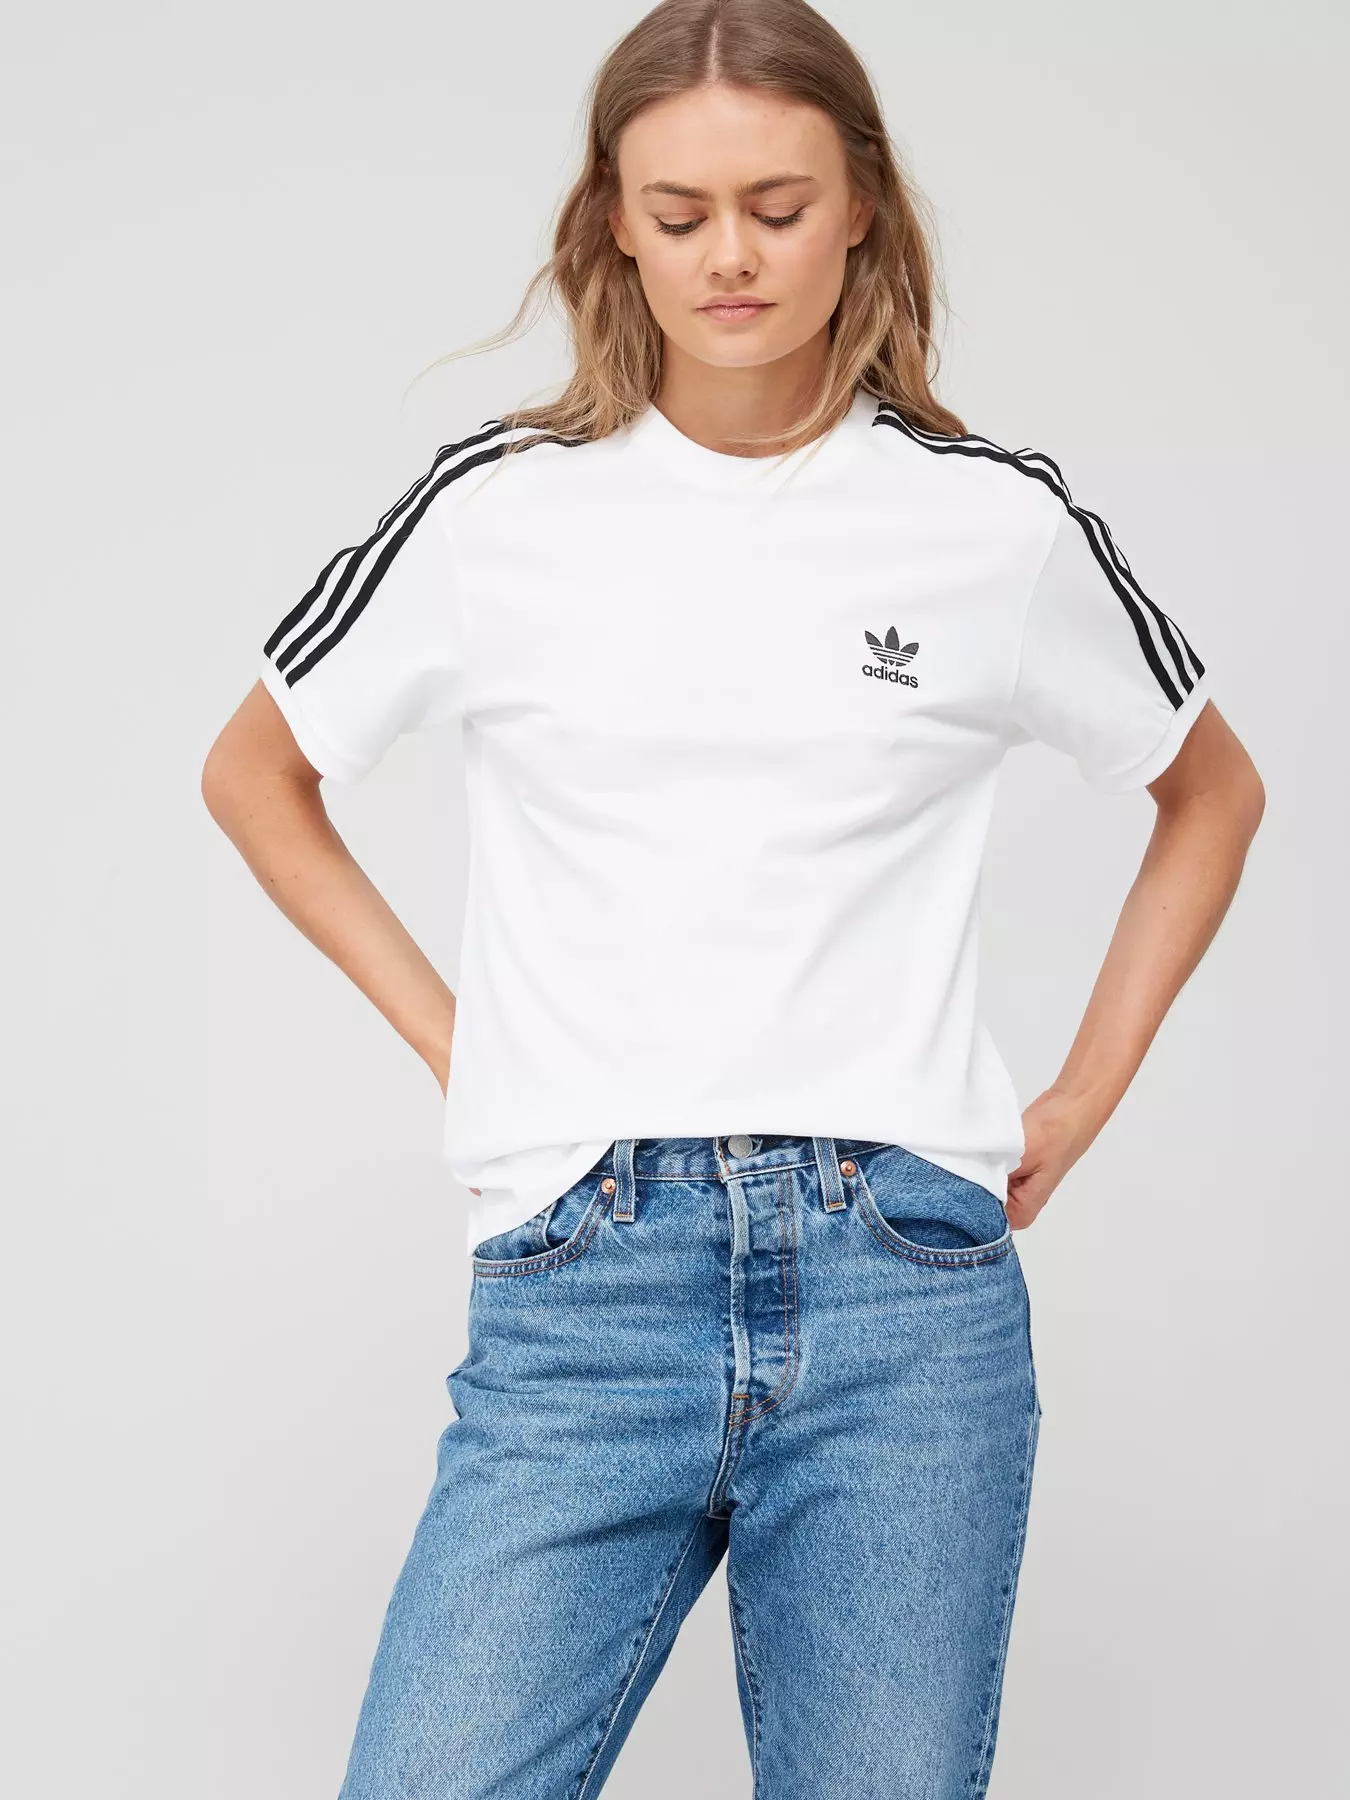 søvn Brandmand Produktionscenter Adidas Women's Tops, Jerseys & T-Shirts | Very Ireland